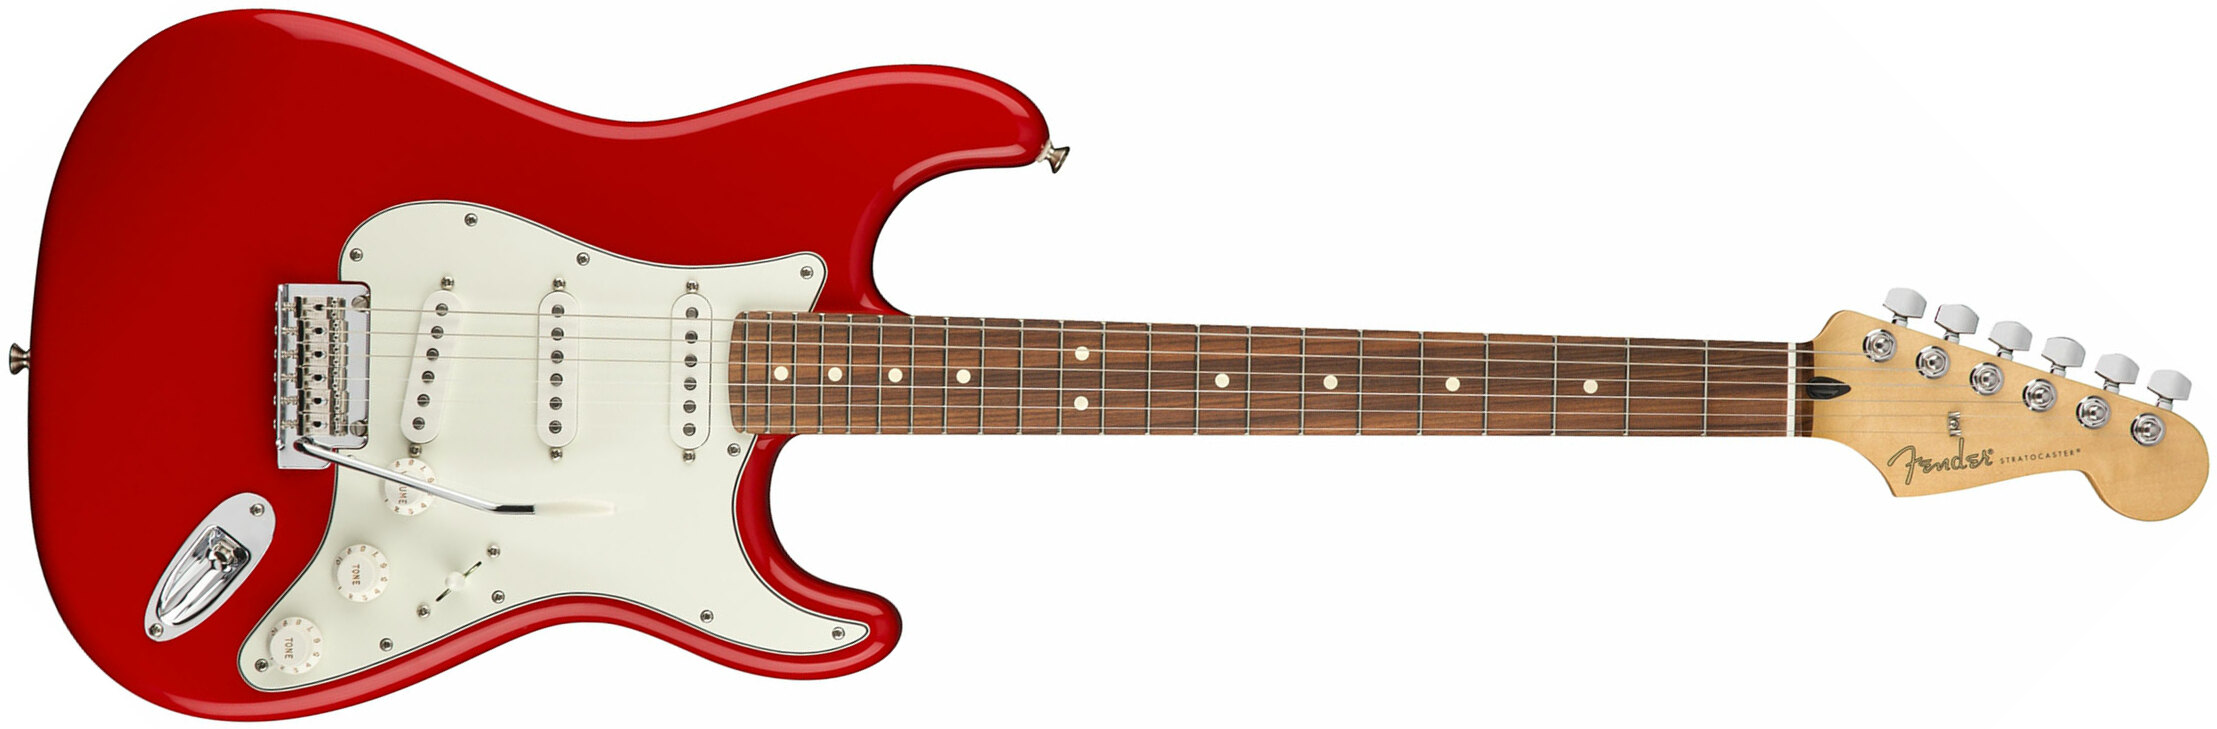 Fender Strat Player Mex Sss Pf - Sonic Red - Guitarra eléctrica con forma de str. - Main picture